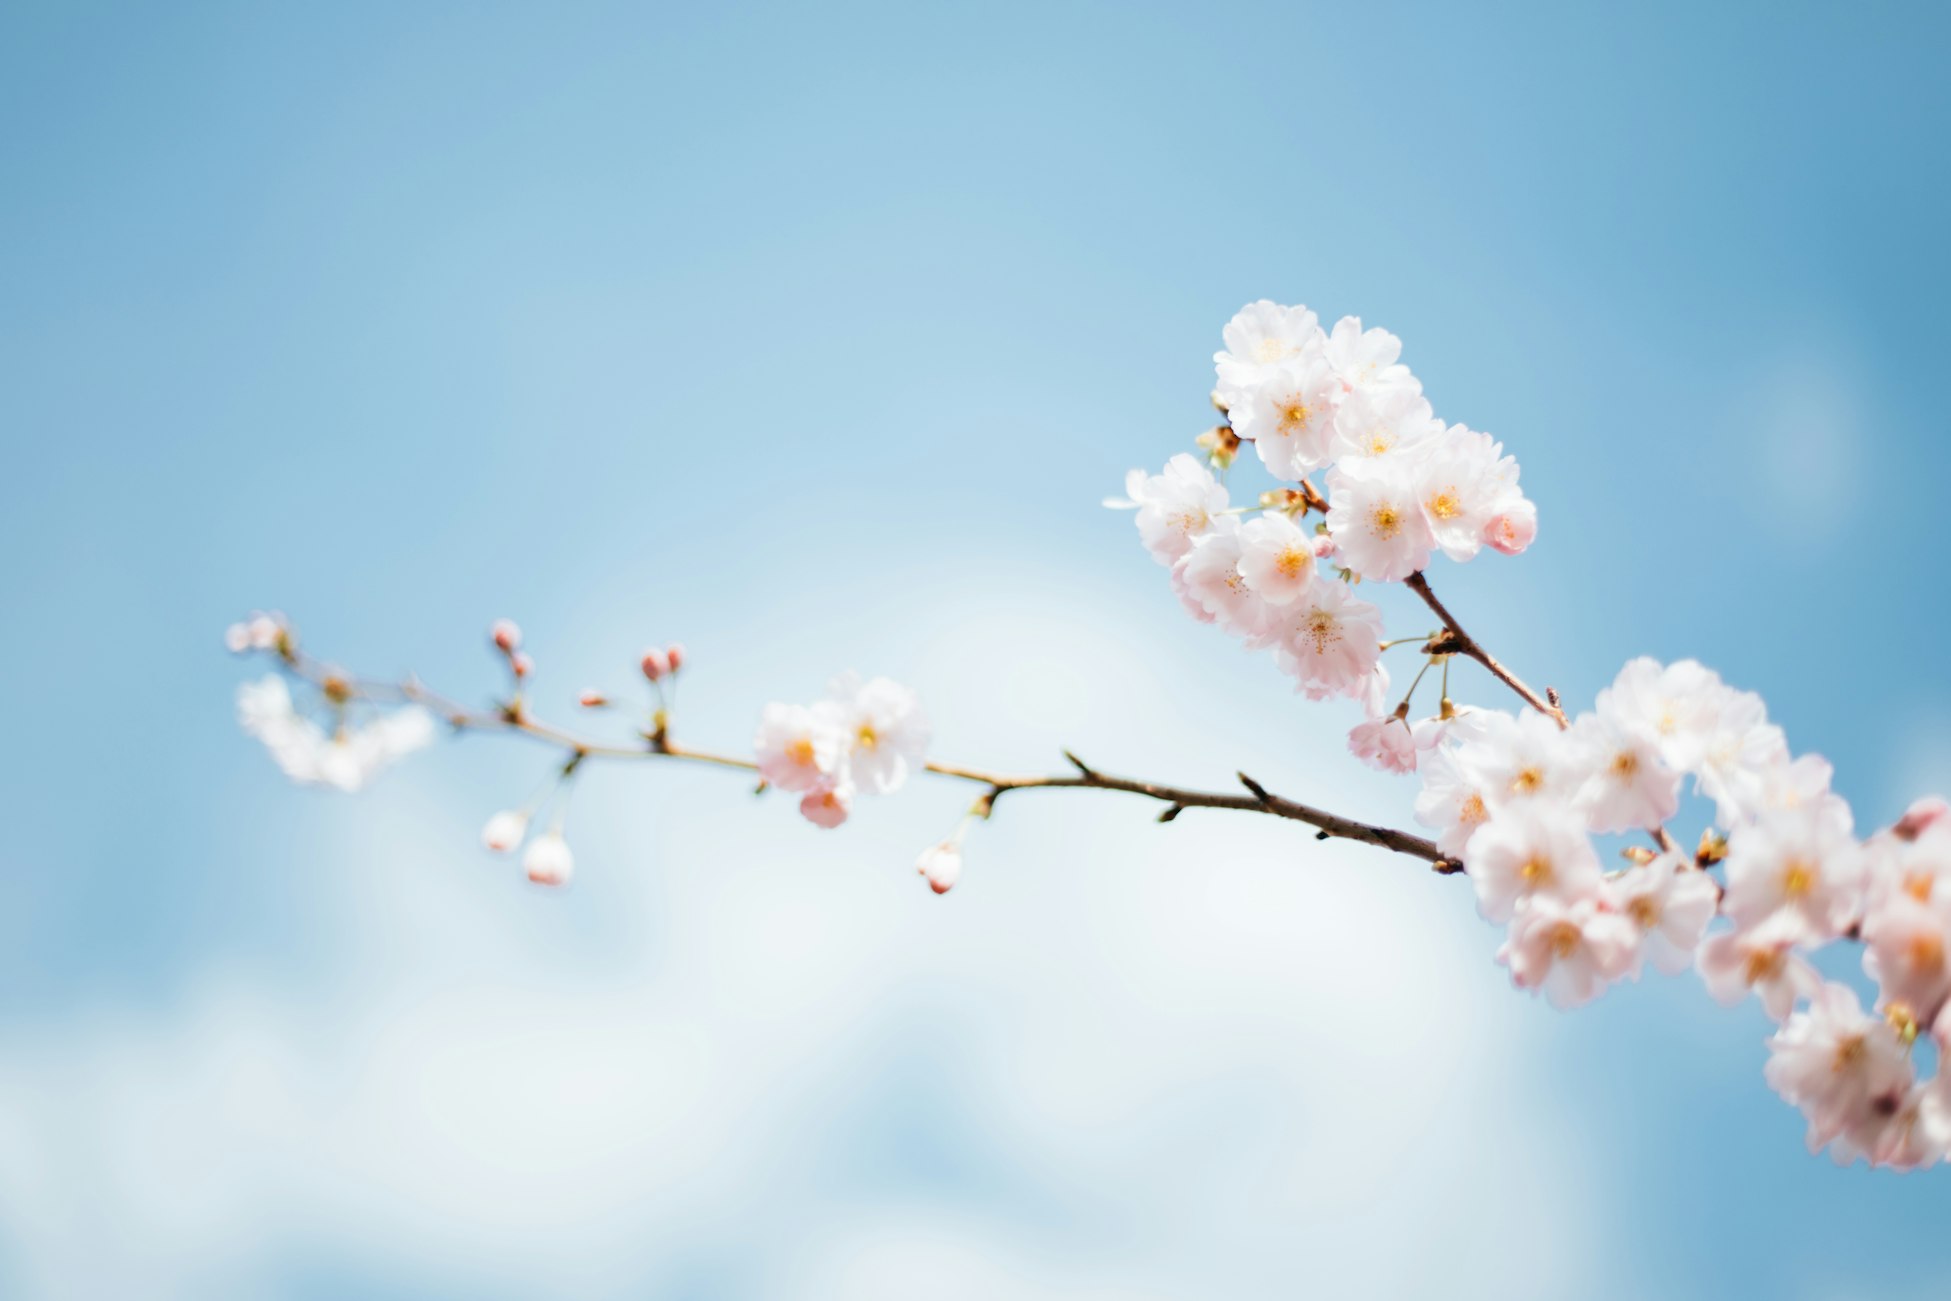  Anthony DELANOIX - Paris, France Spring flower blossoms on branch